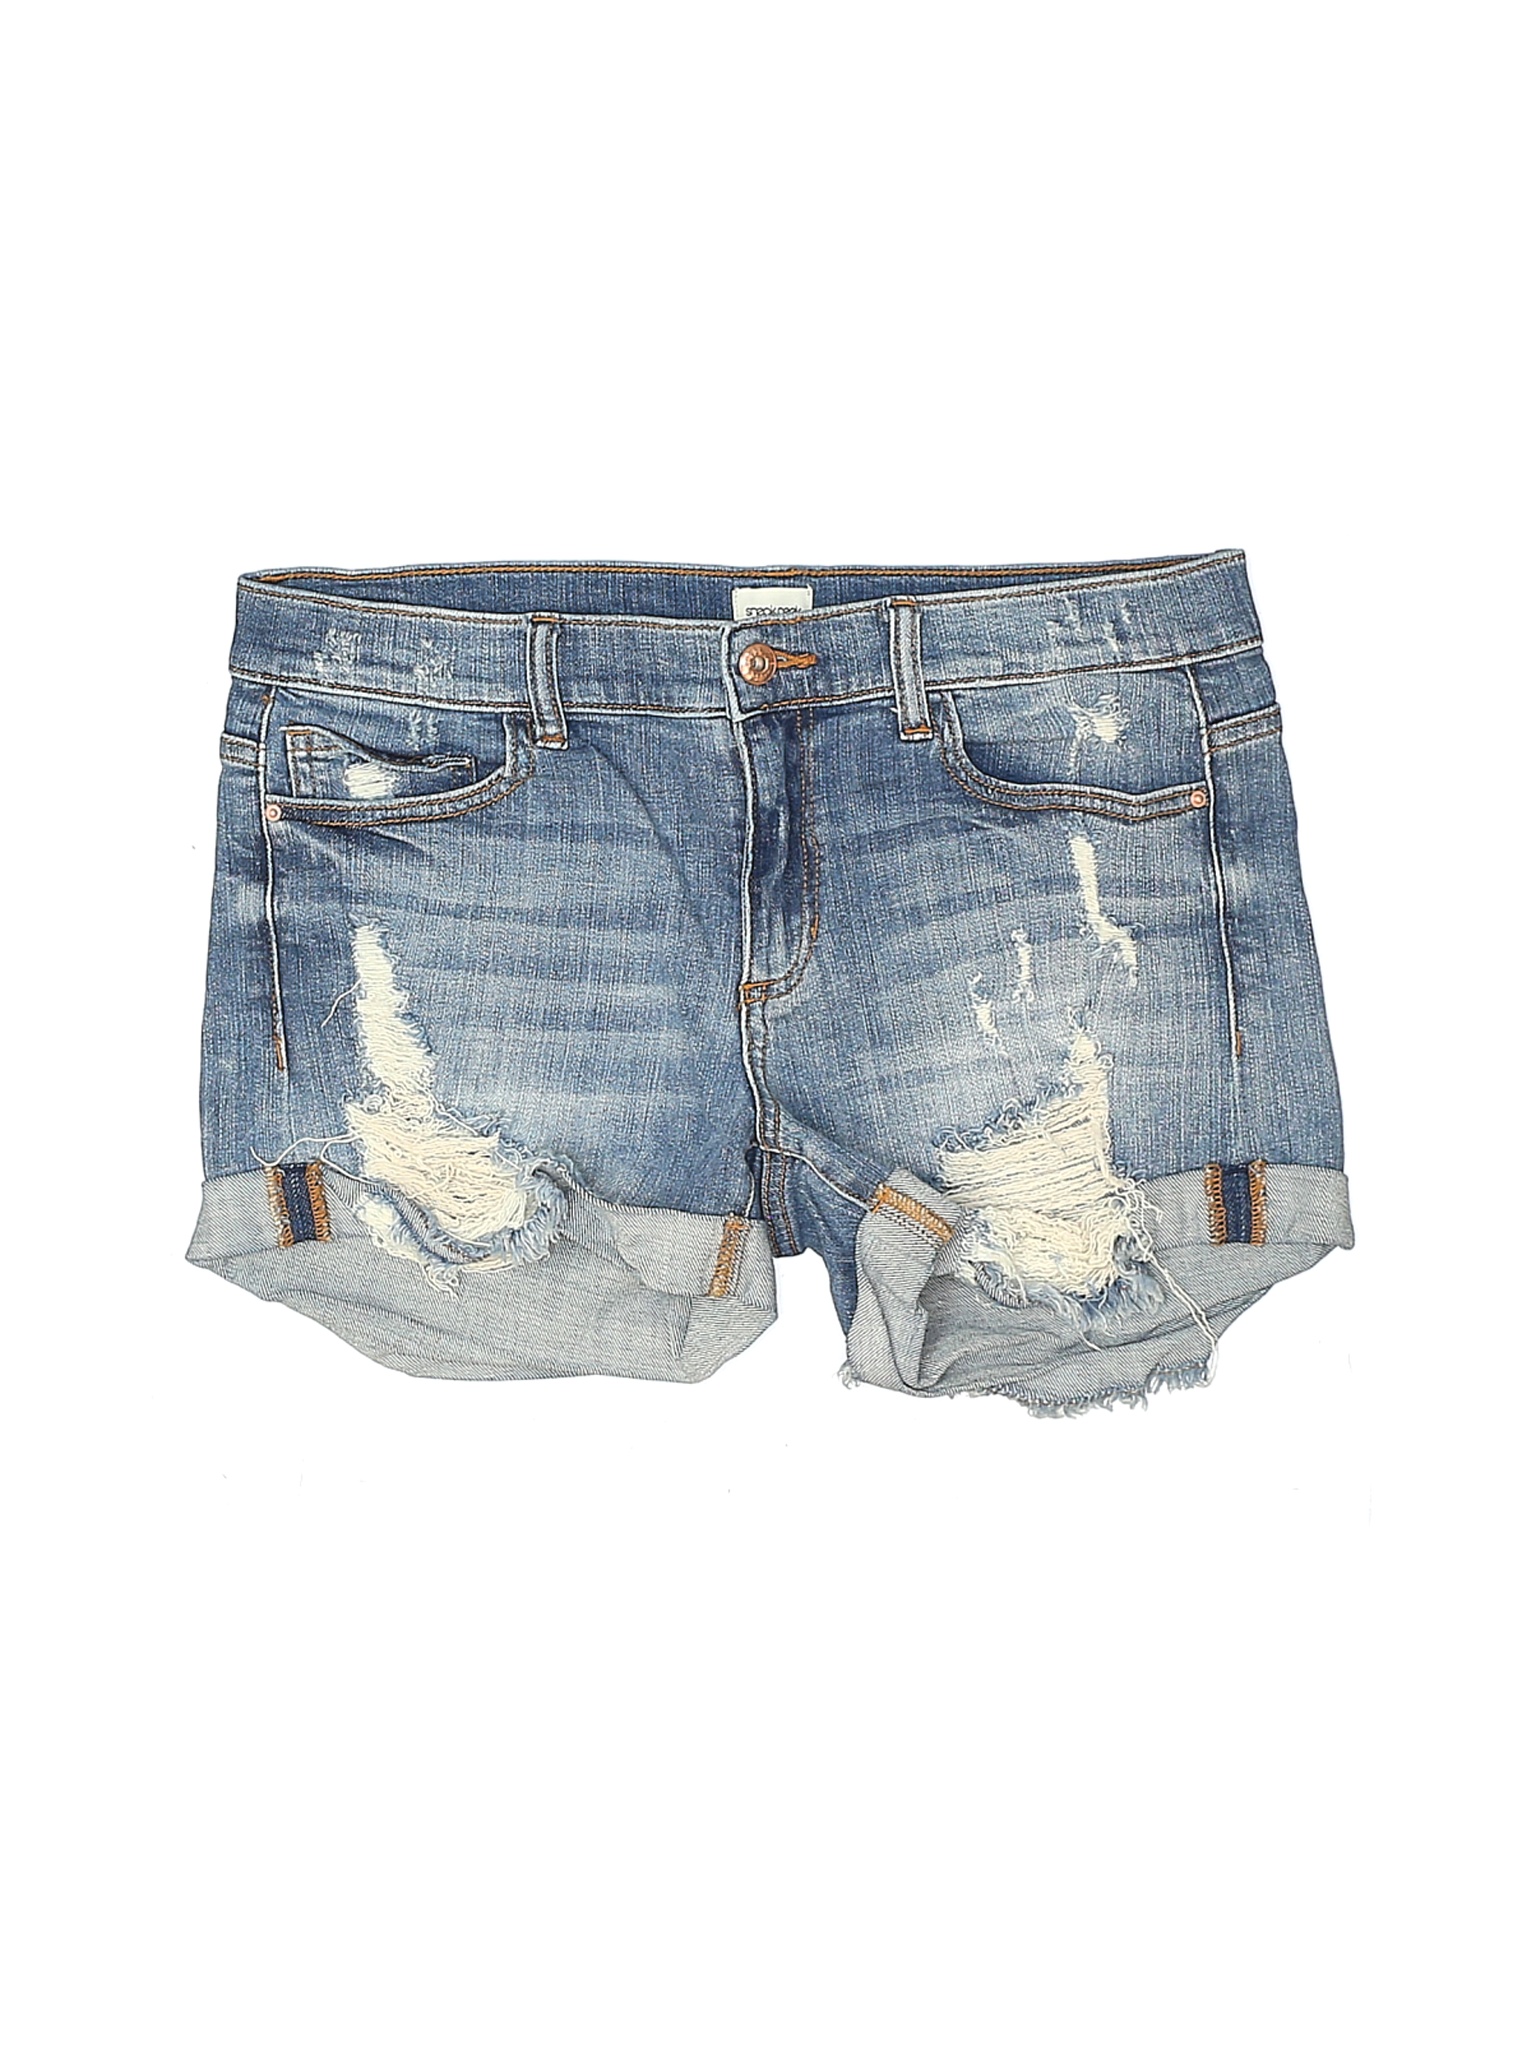 Sneak Peek Women Blue Denim Shorts M Ebay 